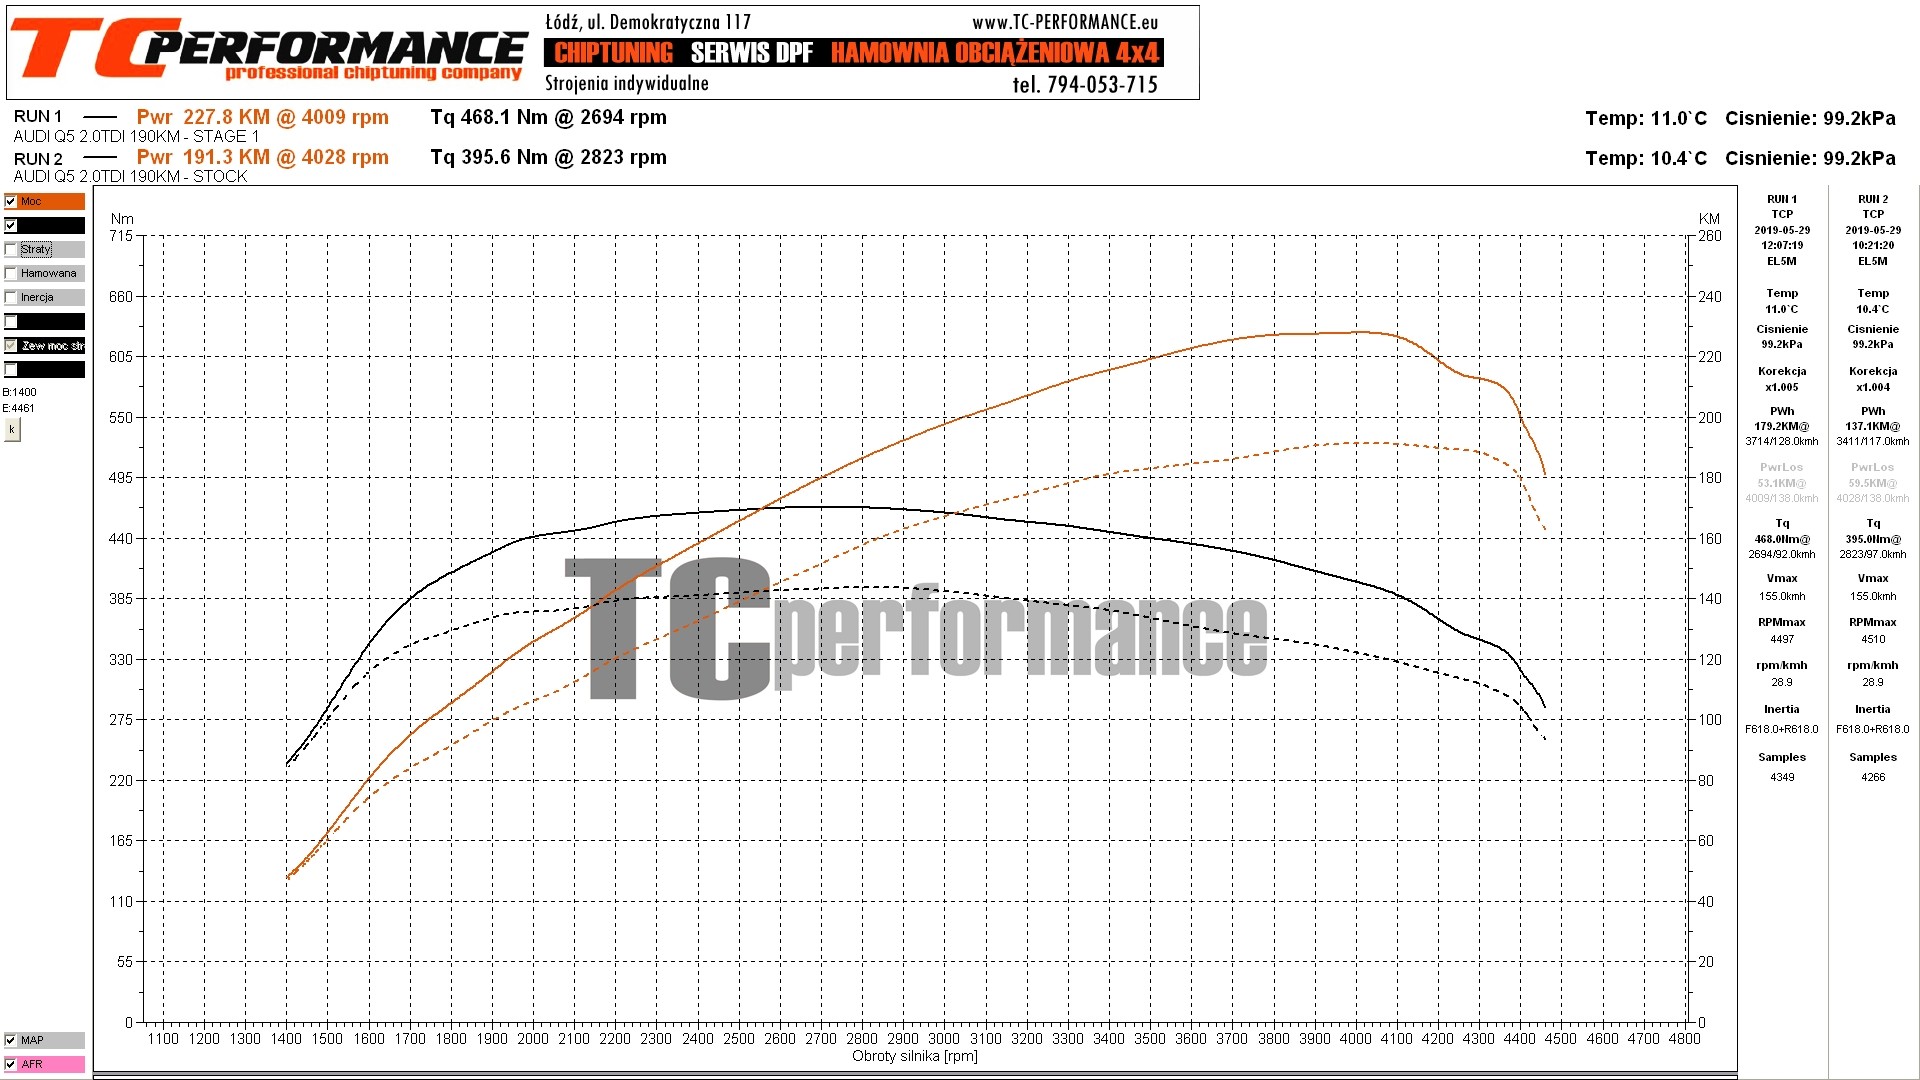 Audi A6 C7 2.0 TFSI 132kW Petrol ECU Remap +30bhp +50Nm Chip Tuning - Euro  Car Electronics store